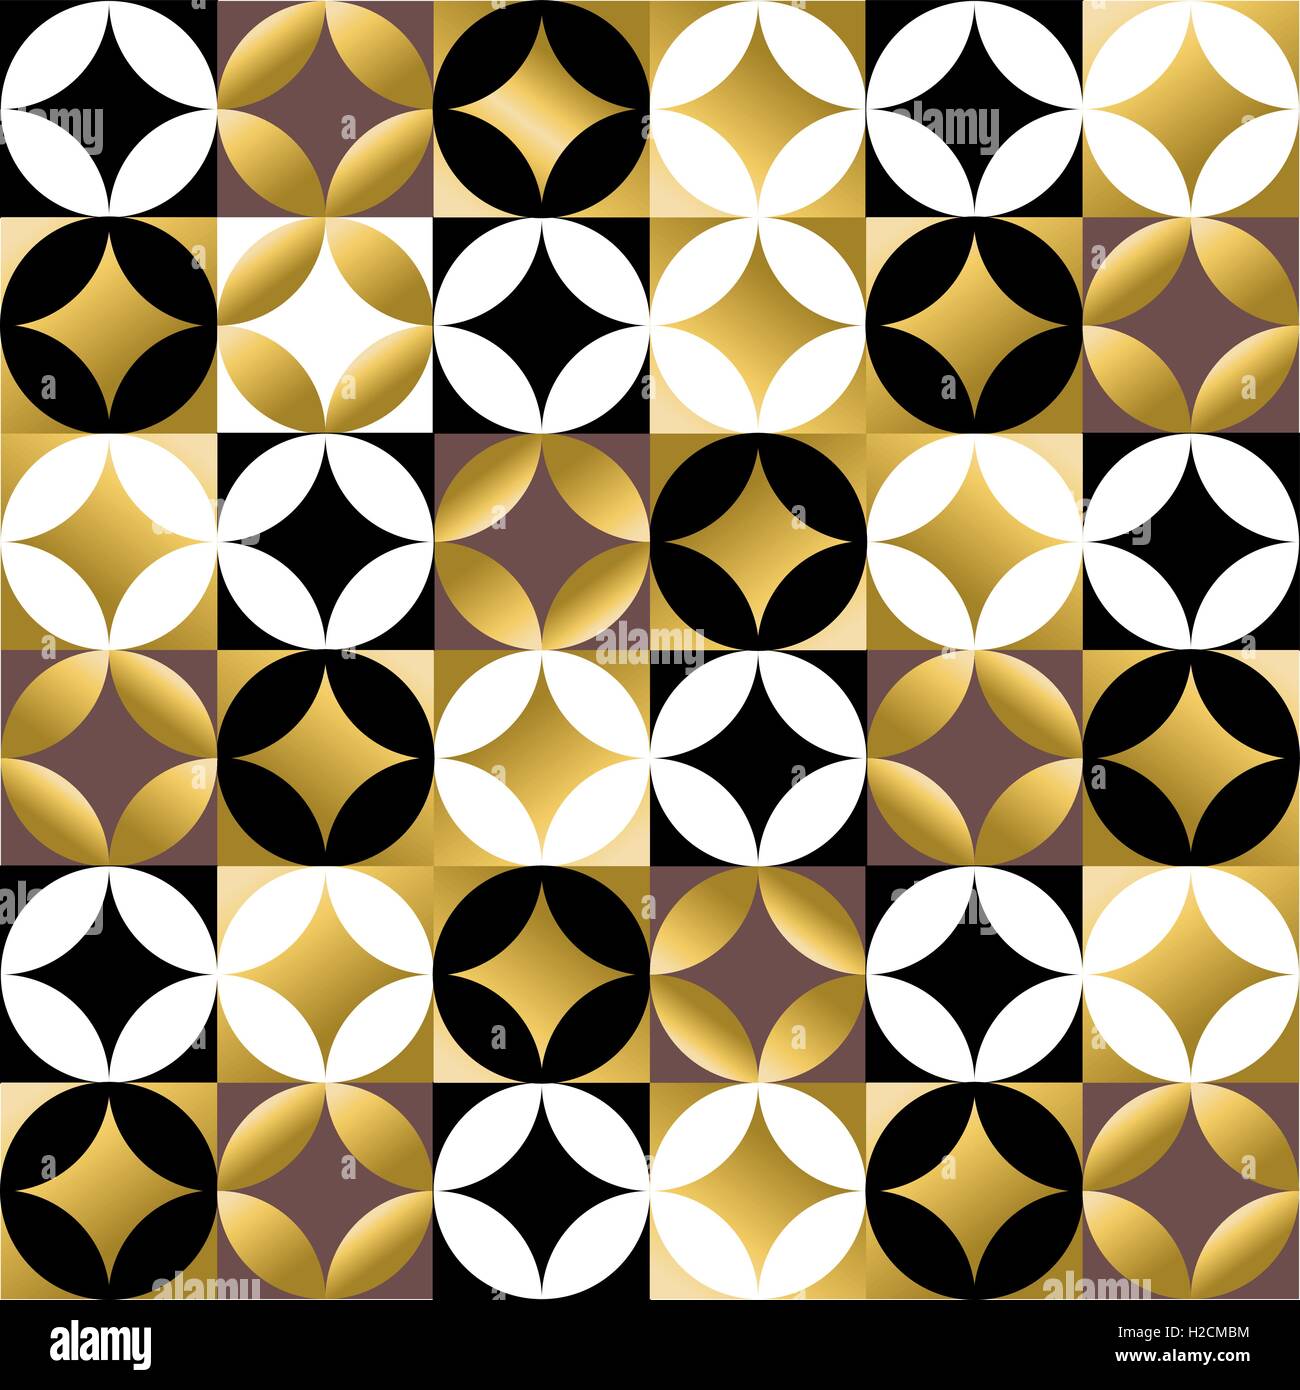 Vintage-Stil dekorative Mosaik nahtlose Kachelmuster mit Goldfarbe abstrakten geometrischen Formen. EPS10 Vektor. Stock Vektor